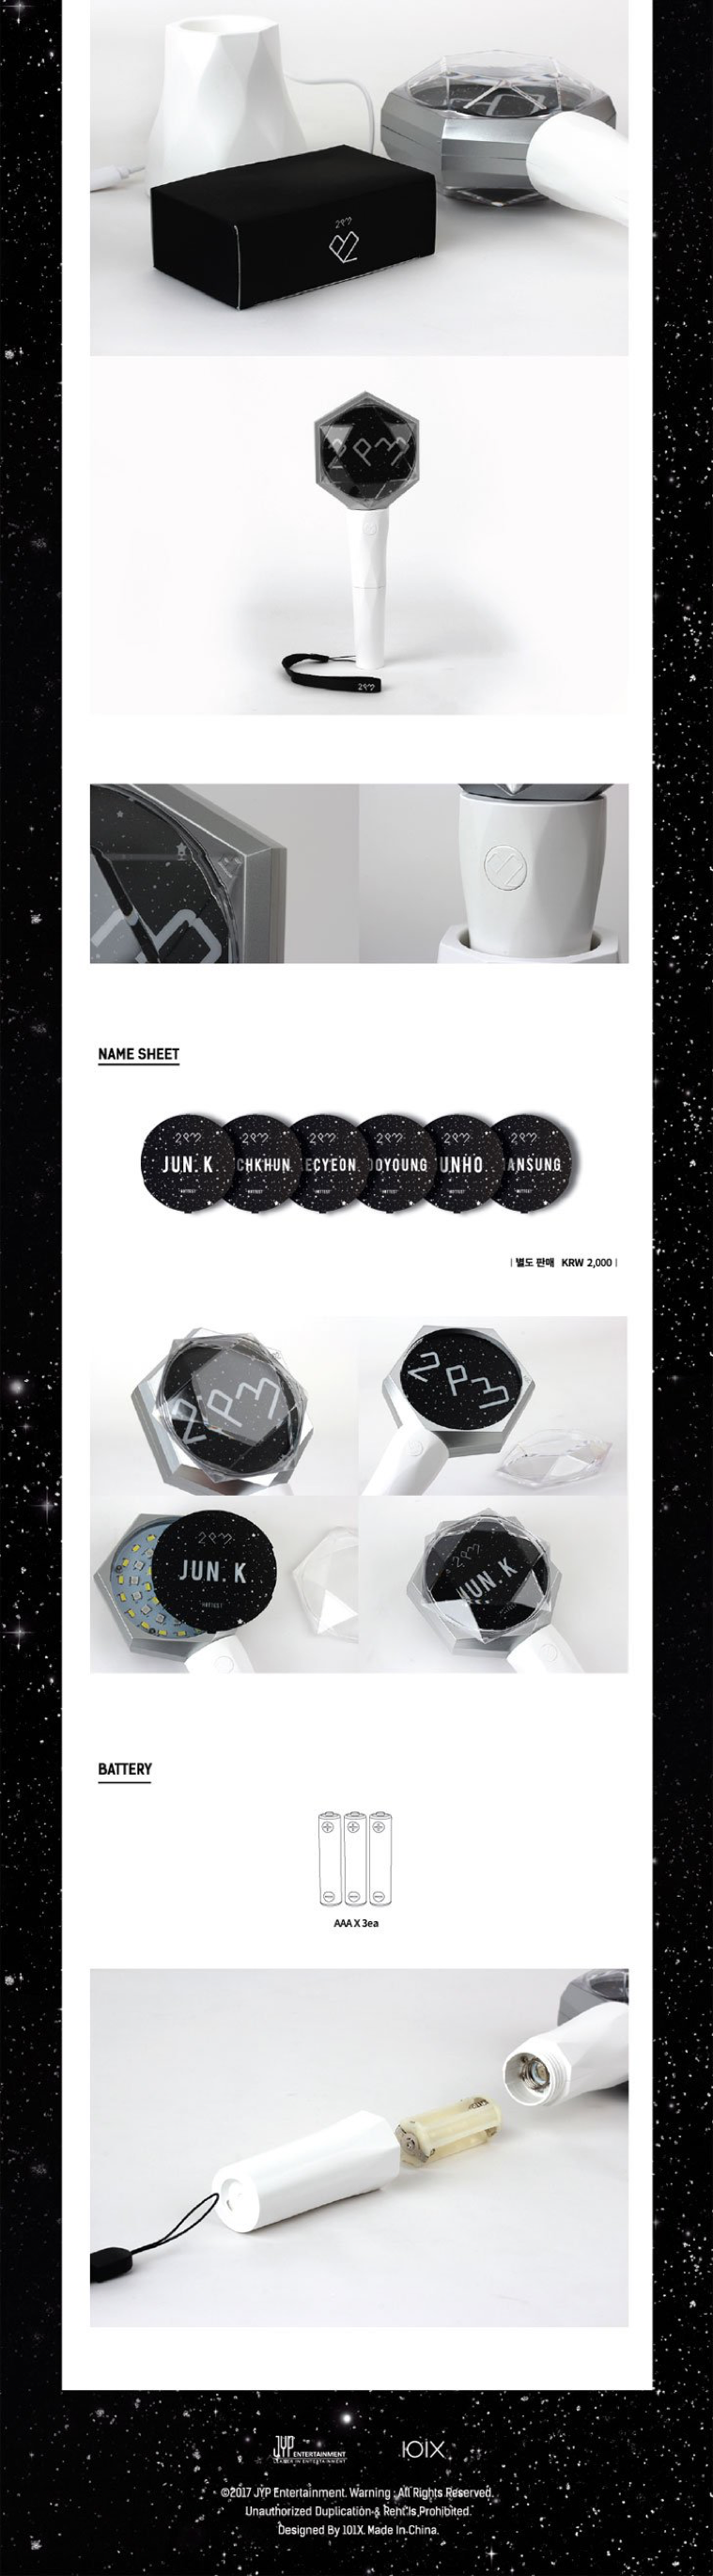 2PM Official Light Stick Ver.2